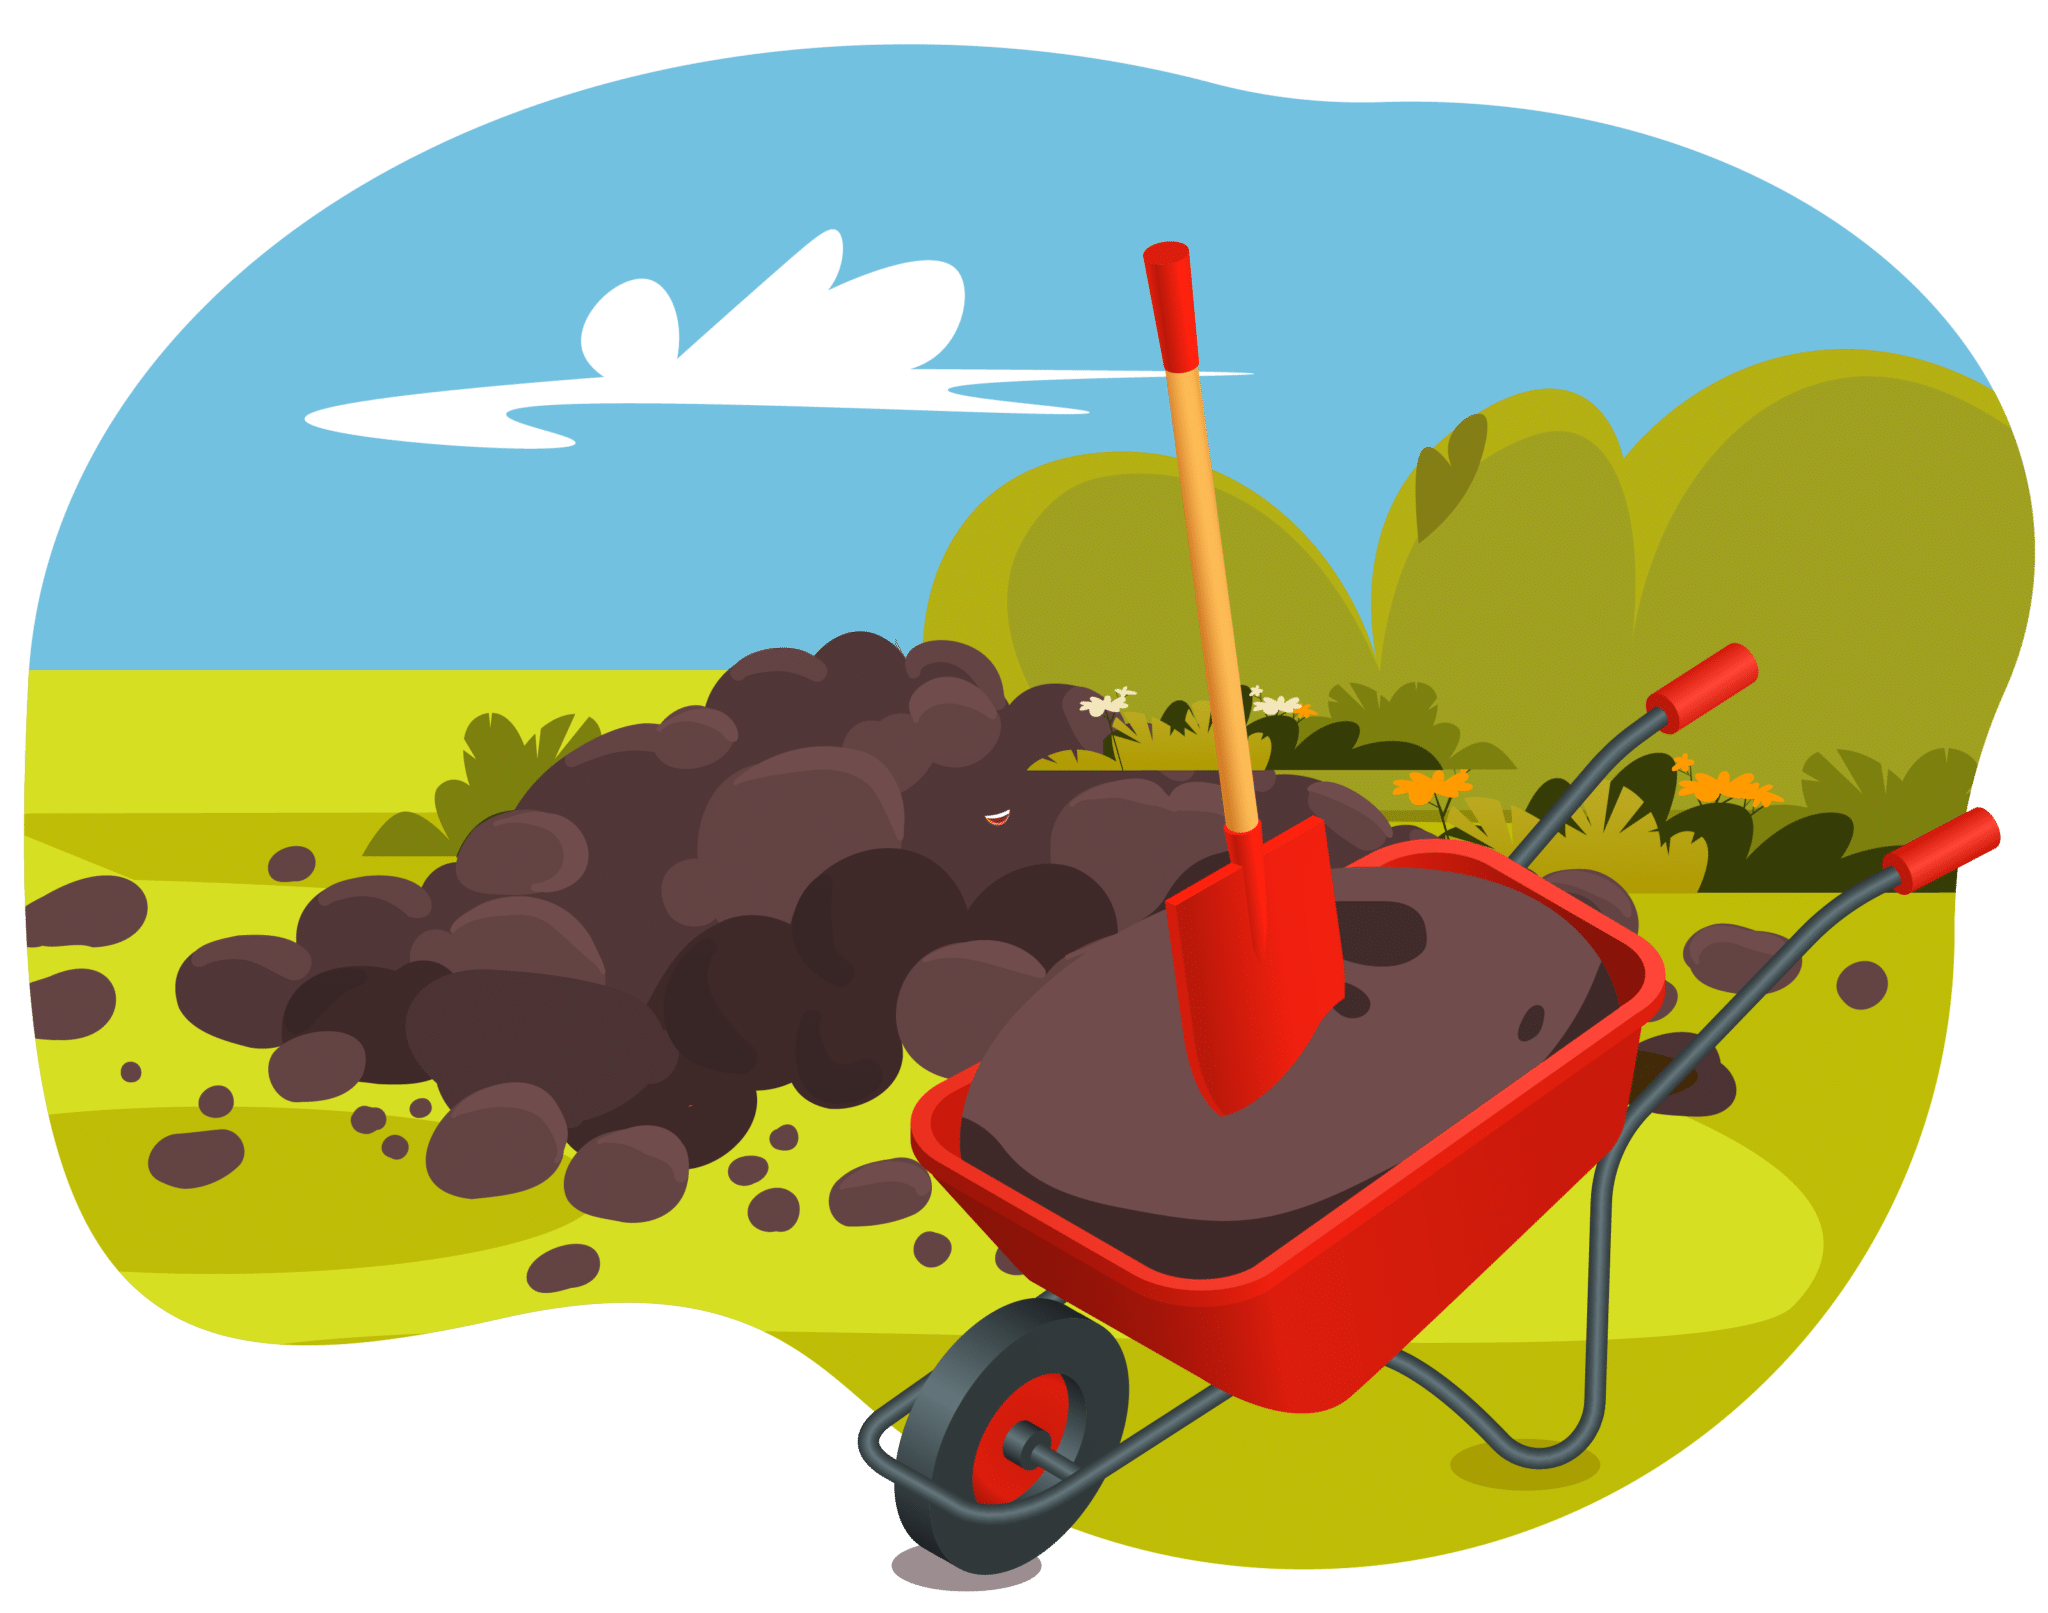 soil removal